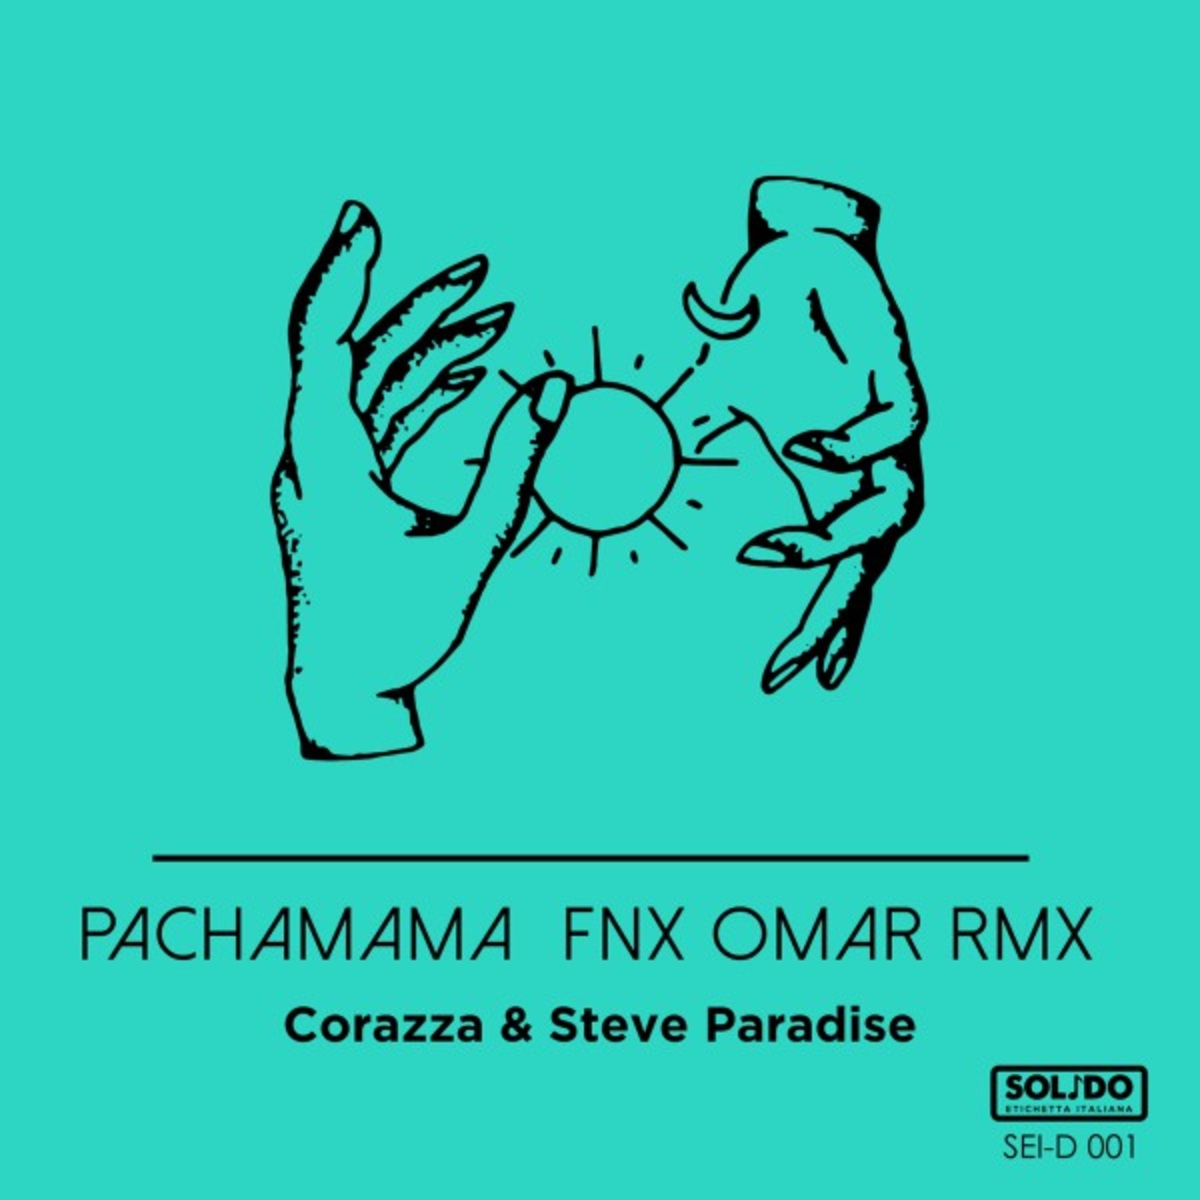 Corazza & Steve Paradise - Pachamama (FNX Omar Remix) / Solido Etichetta Italiana